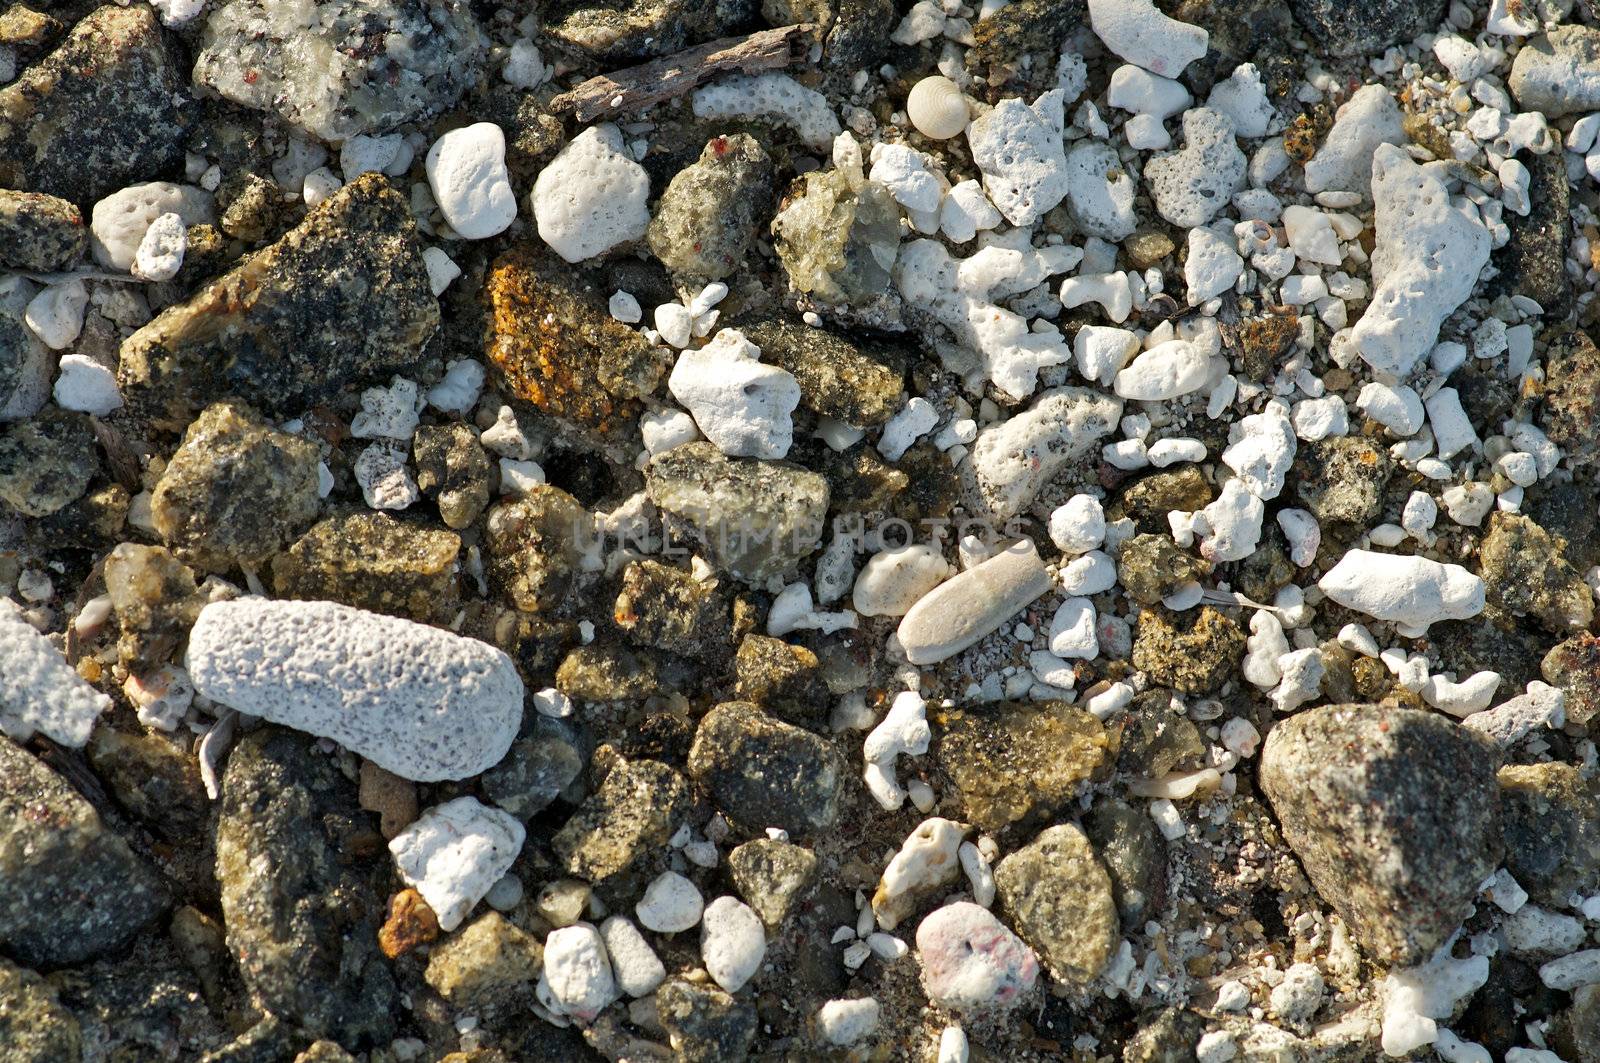 Seashore rocks, shells and corals background by zhekos